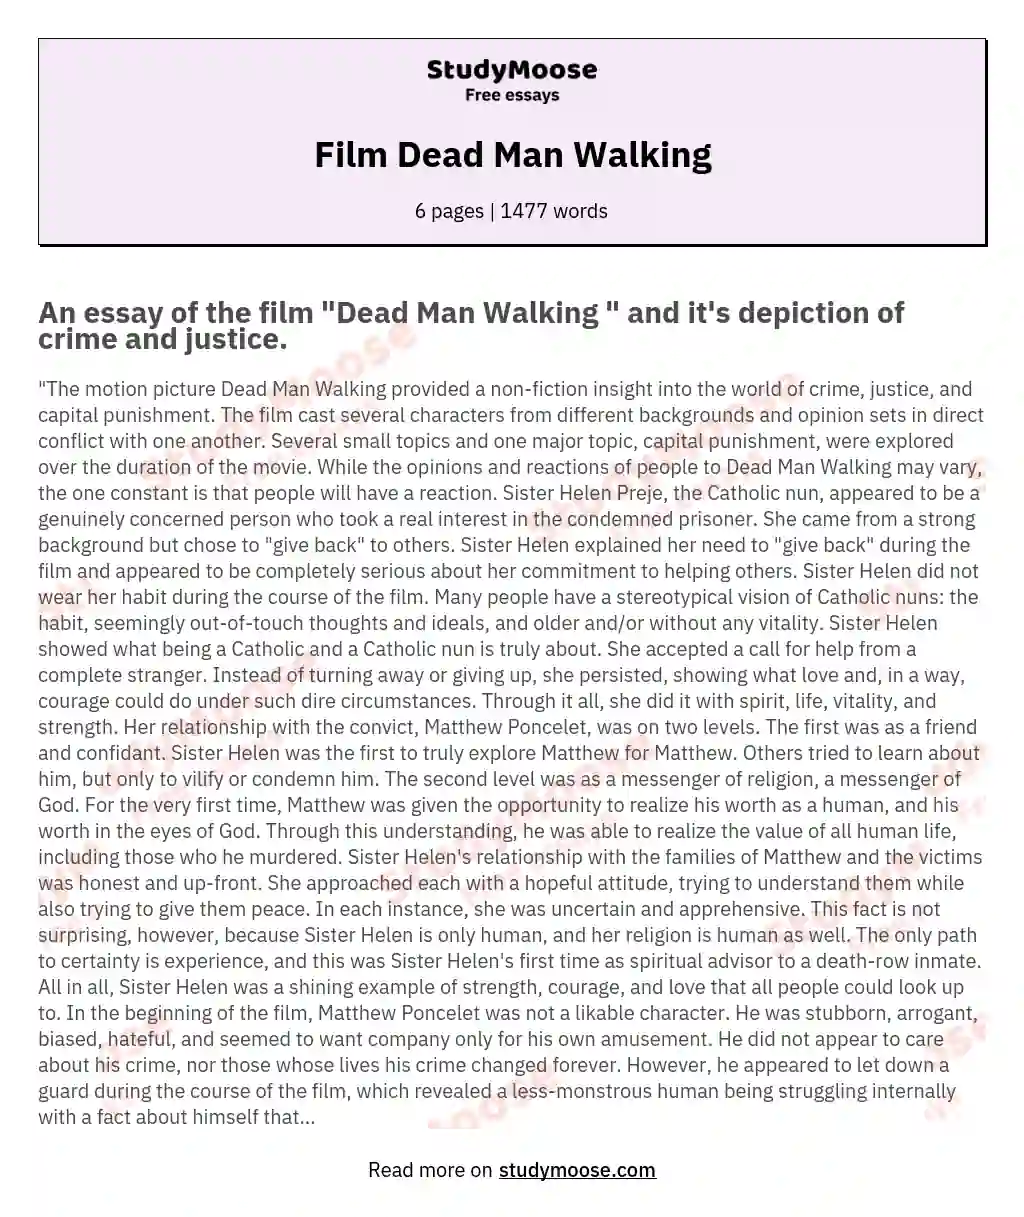 Film Dead Man Walking essay